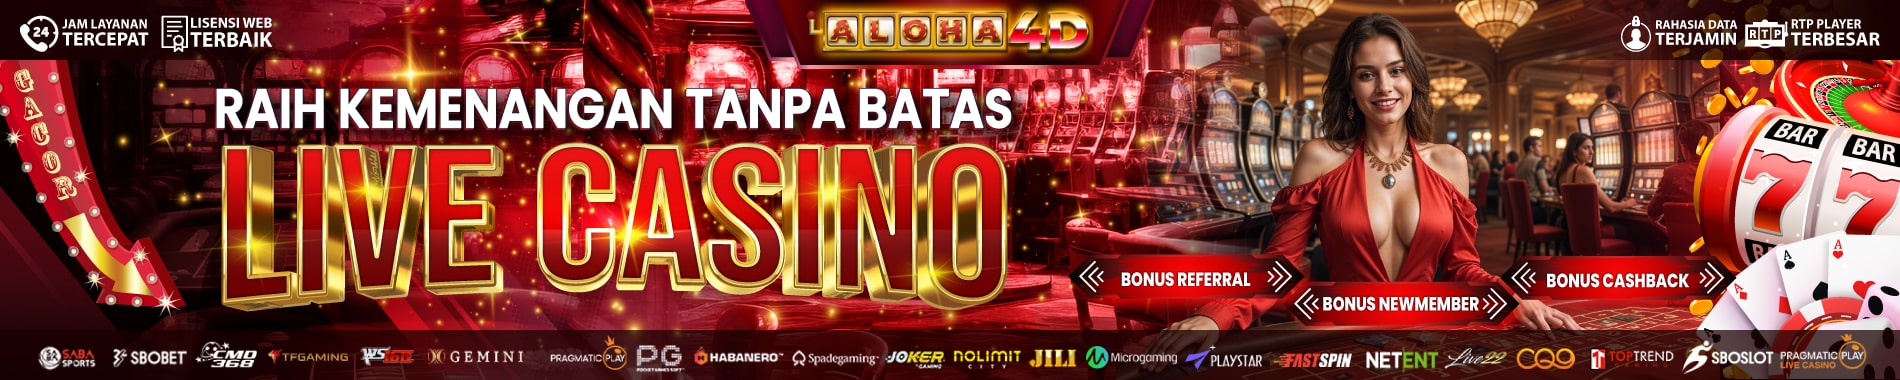 Live Casino aloha4d